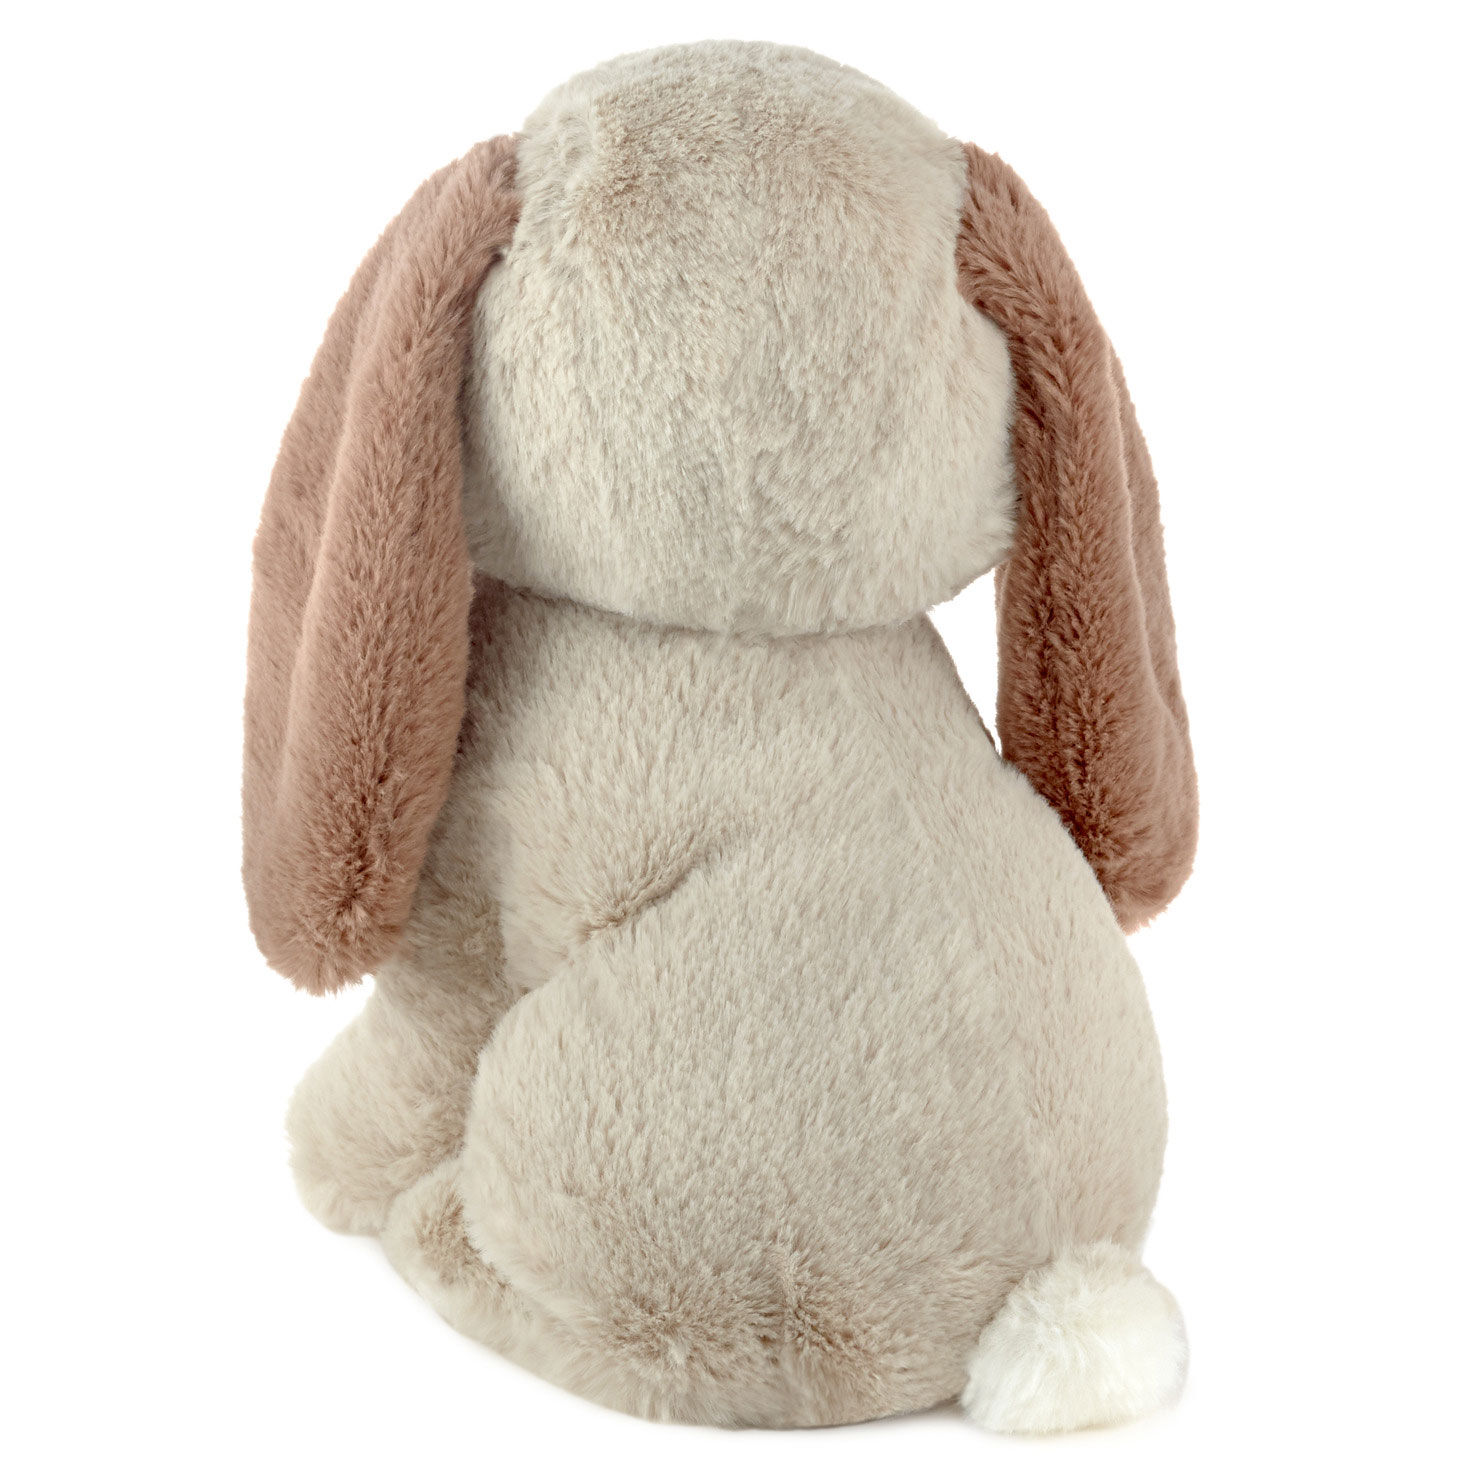 Baby Bunny Stuffed Animal, 8.5" for only USD 18.99 | Hallmark